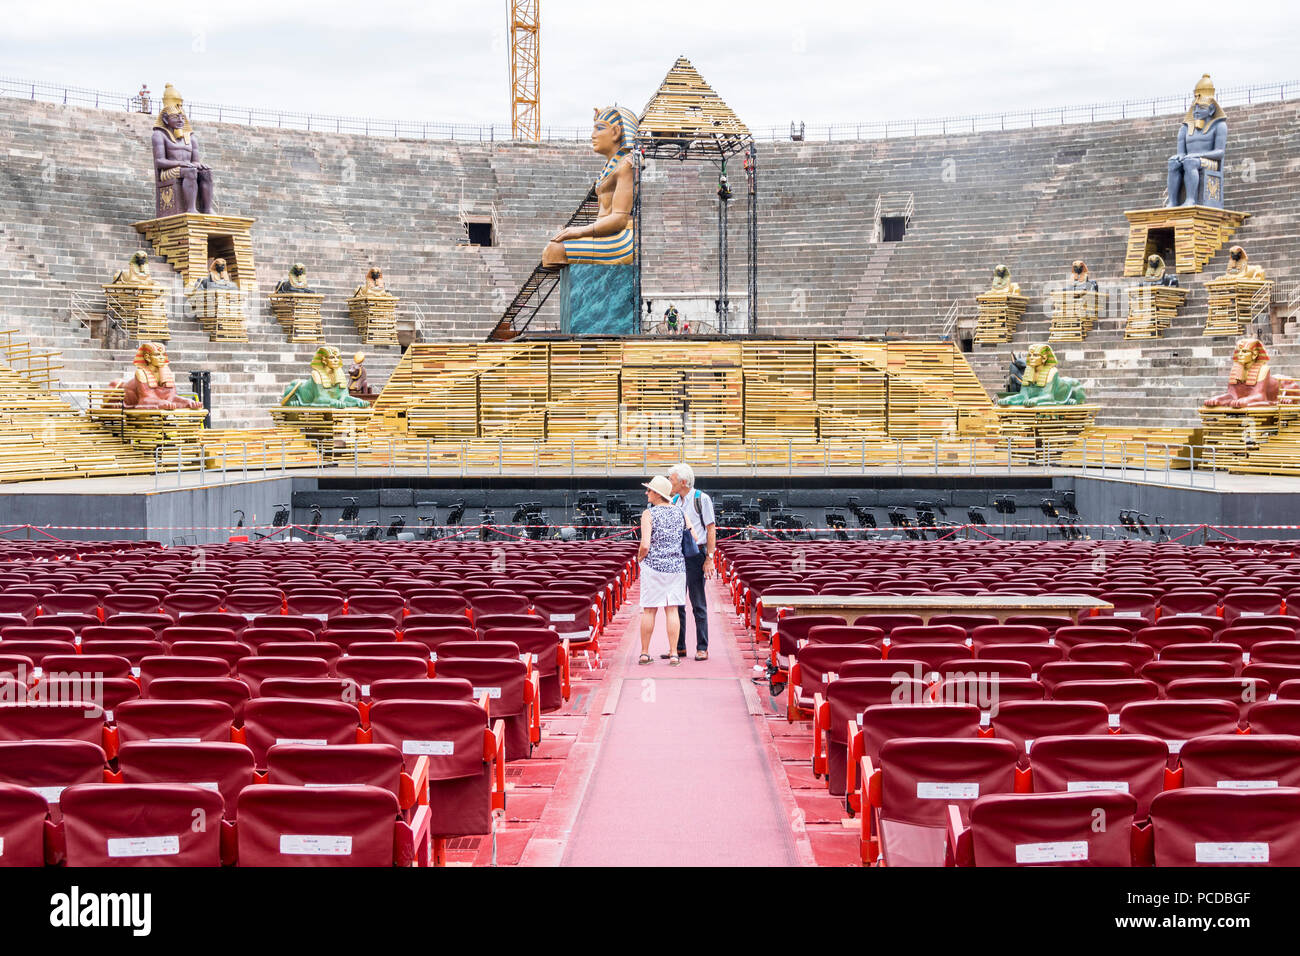 Giuseppe Verdi Aida Opera Stage Setup eingestellt, Arena Verona Italien  Verona Amphitheater, Verona Amphitheater Theater Konzept, Zielgruppe Balkon  Stockfotografie - Alamy